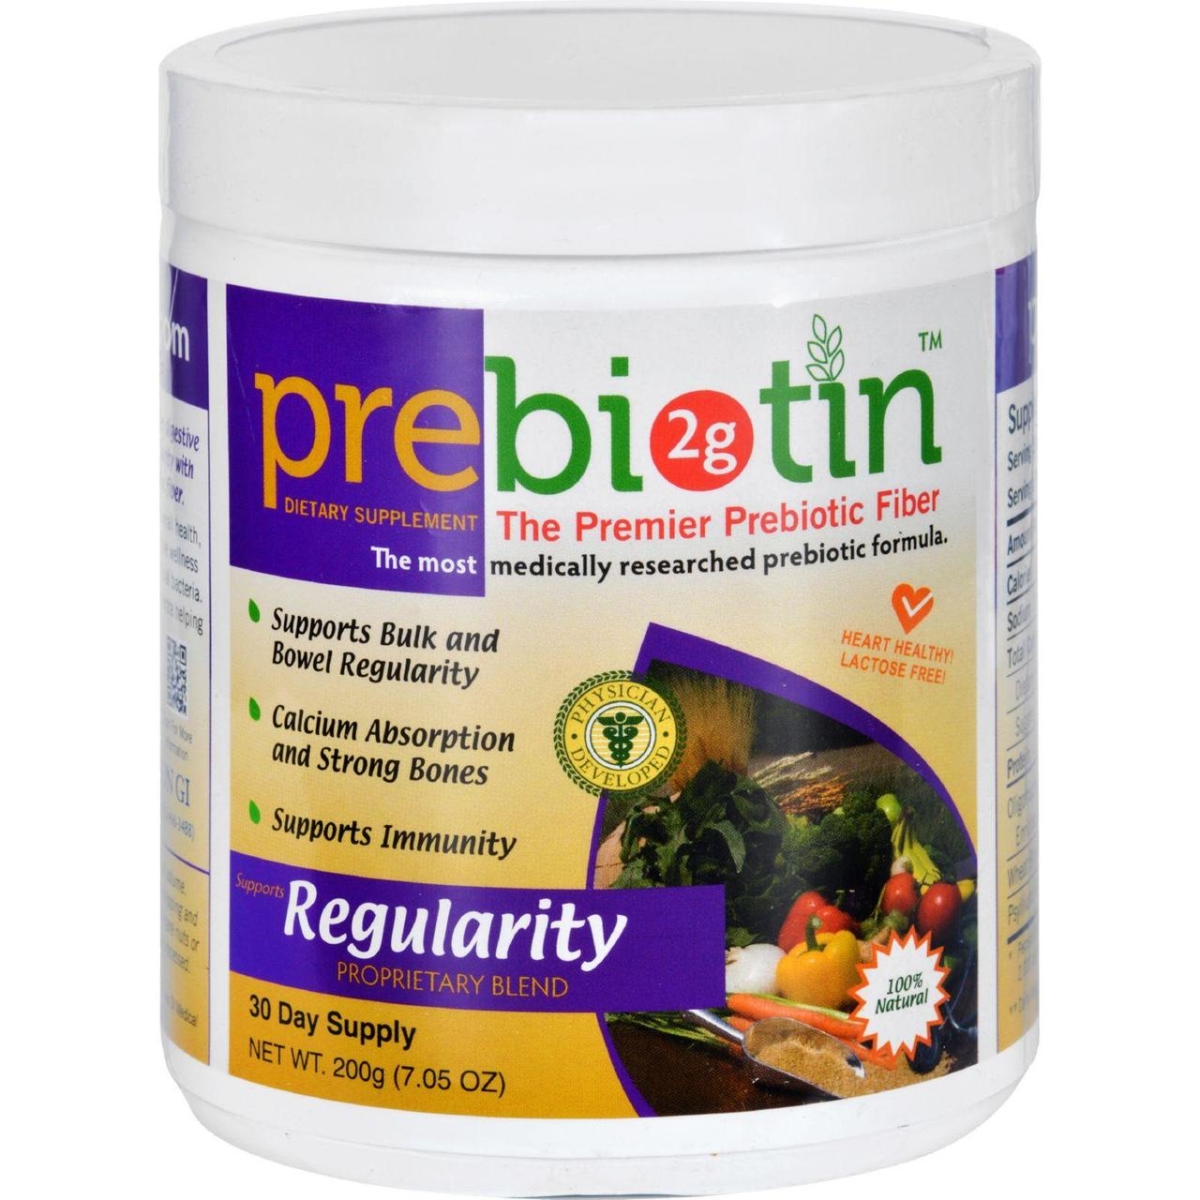 Hg1614023 7.5 Oz Prebiotic Fiber - Regularity